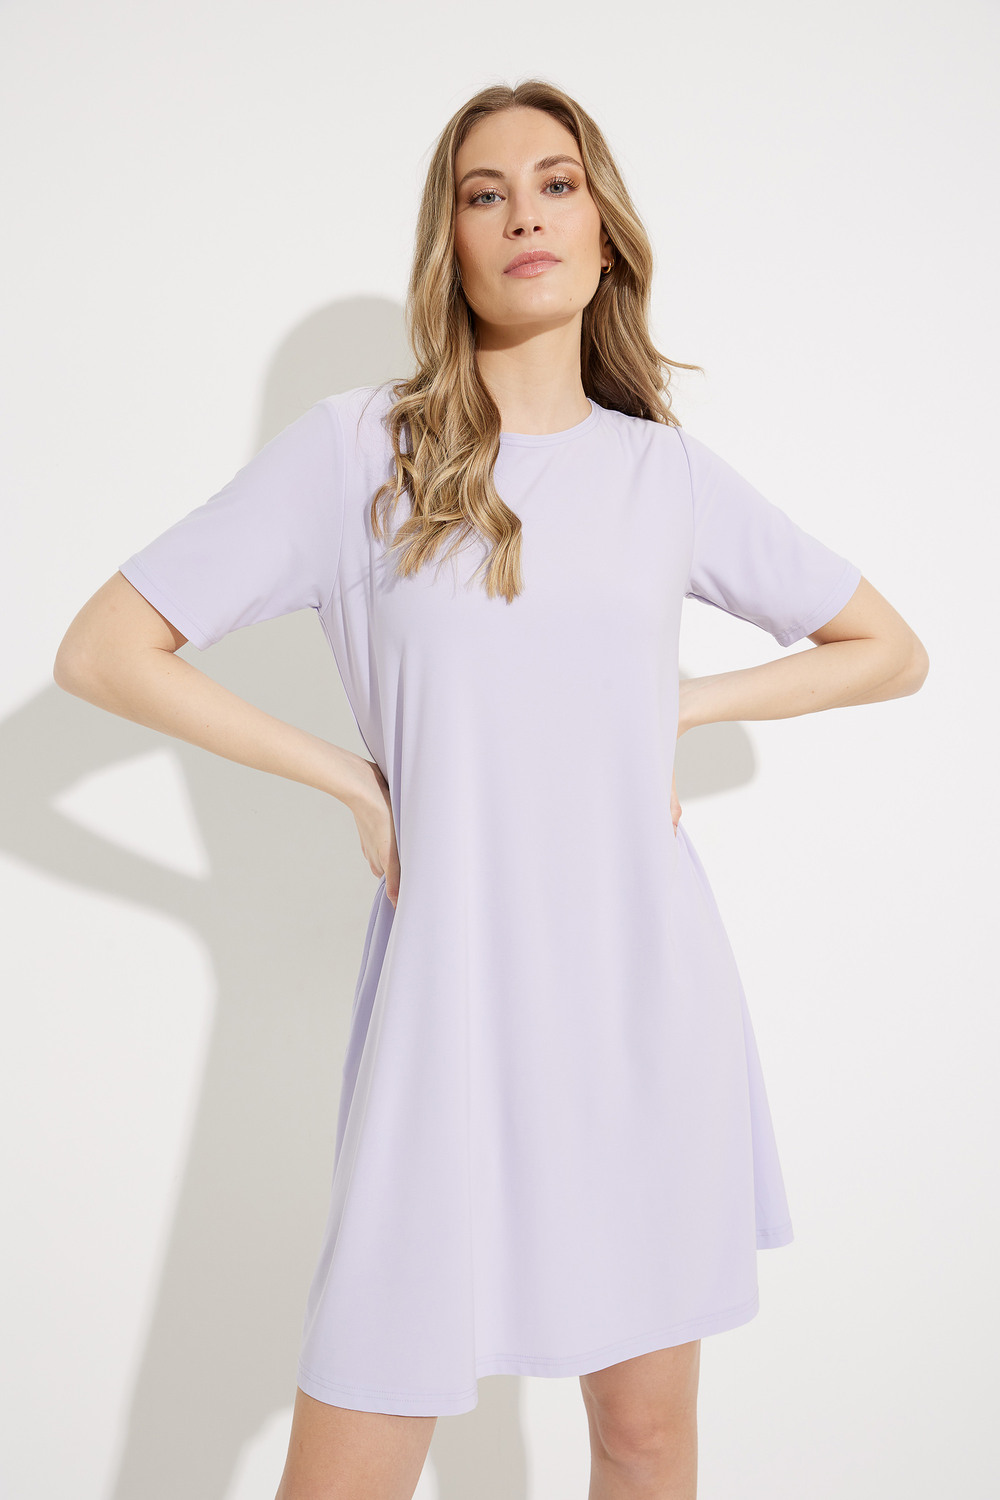 Short Sleeve T-Shirt Dress Style 2895S-1. Lavender 